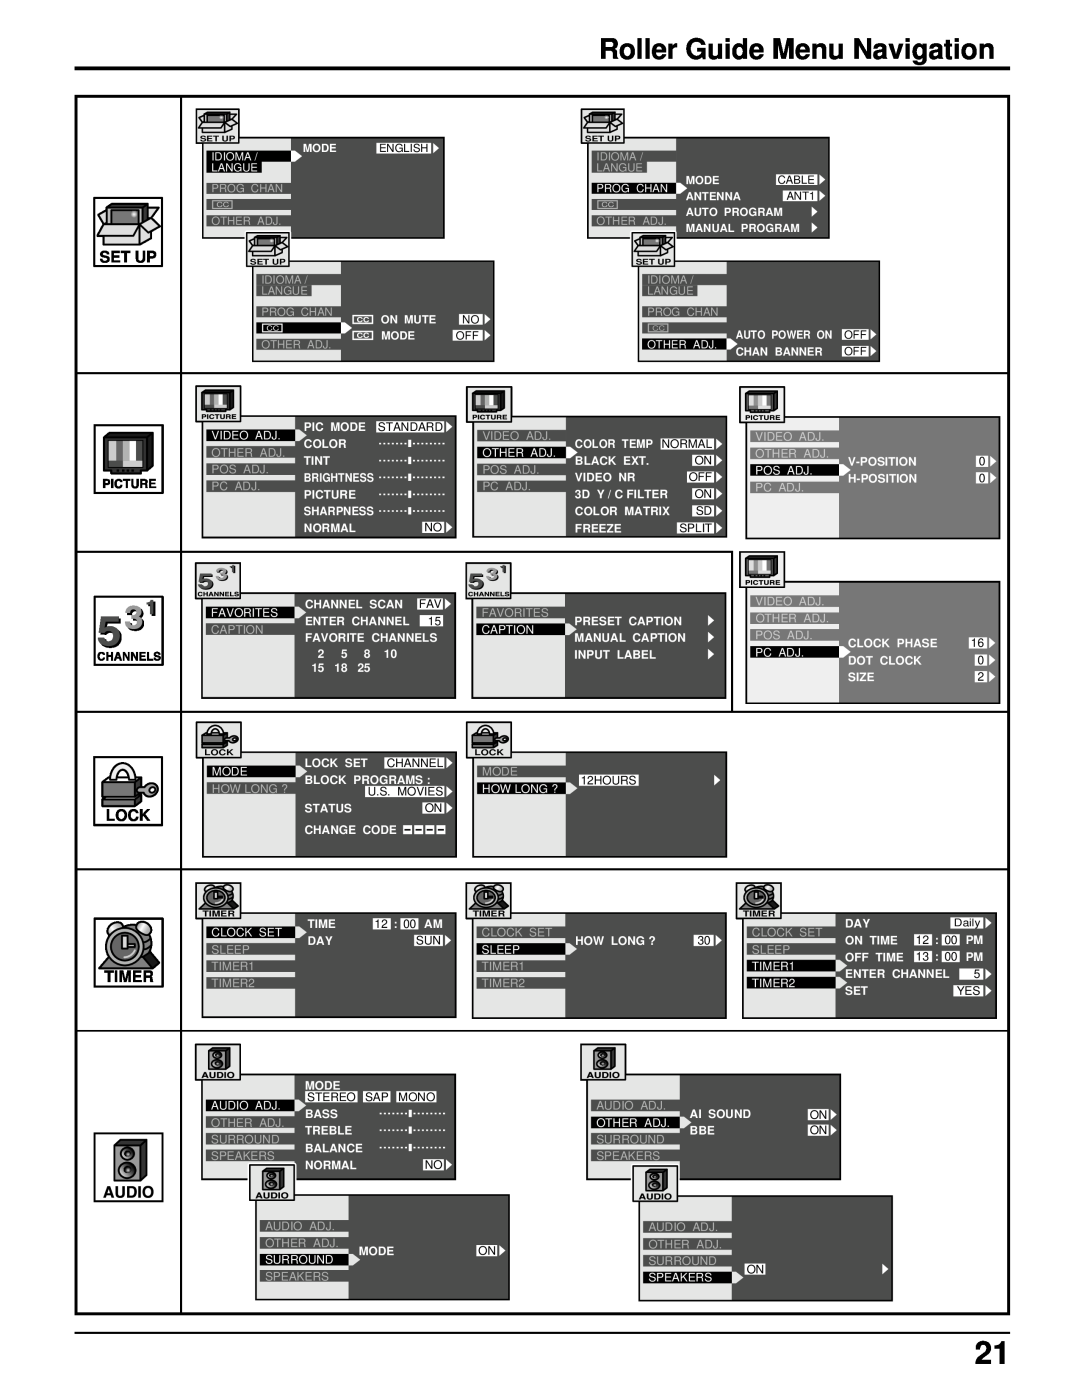 Panasonic PT 52DL52 manual Roller Guide Menu Navigation, Set Up, Lock, Timer, Idioma, Langue, Prog Chan, Other Adj, Pc Adj 